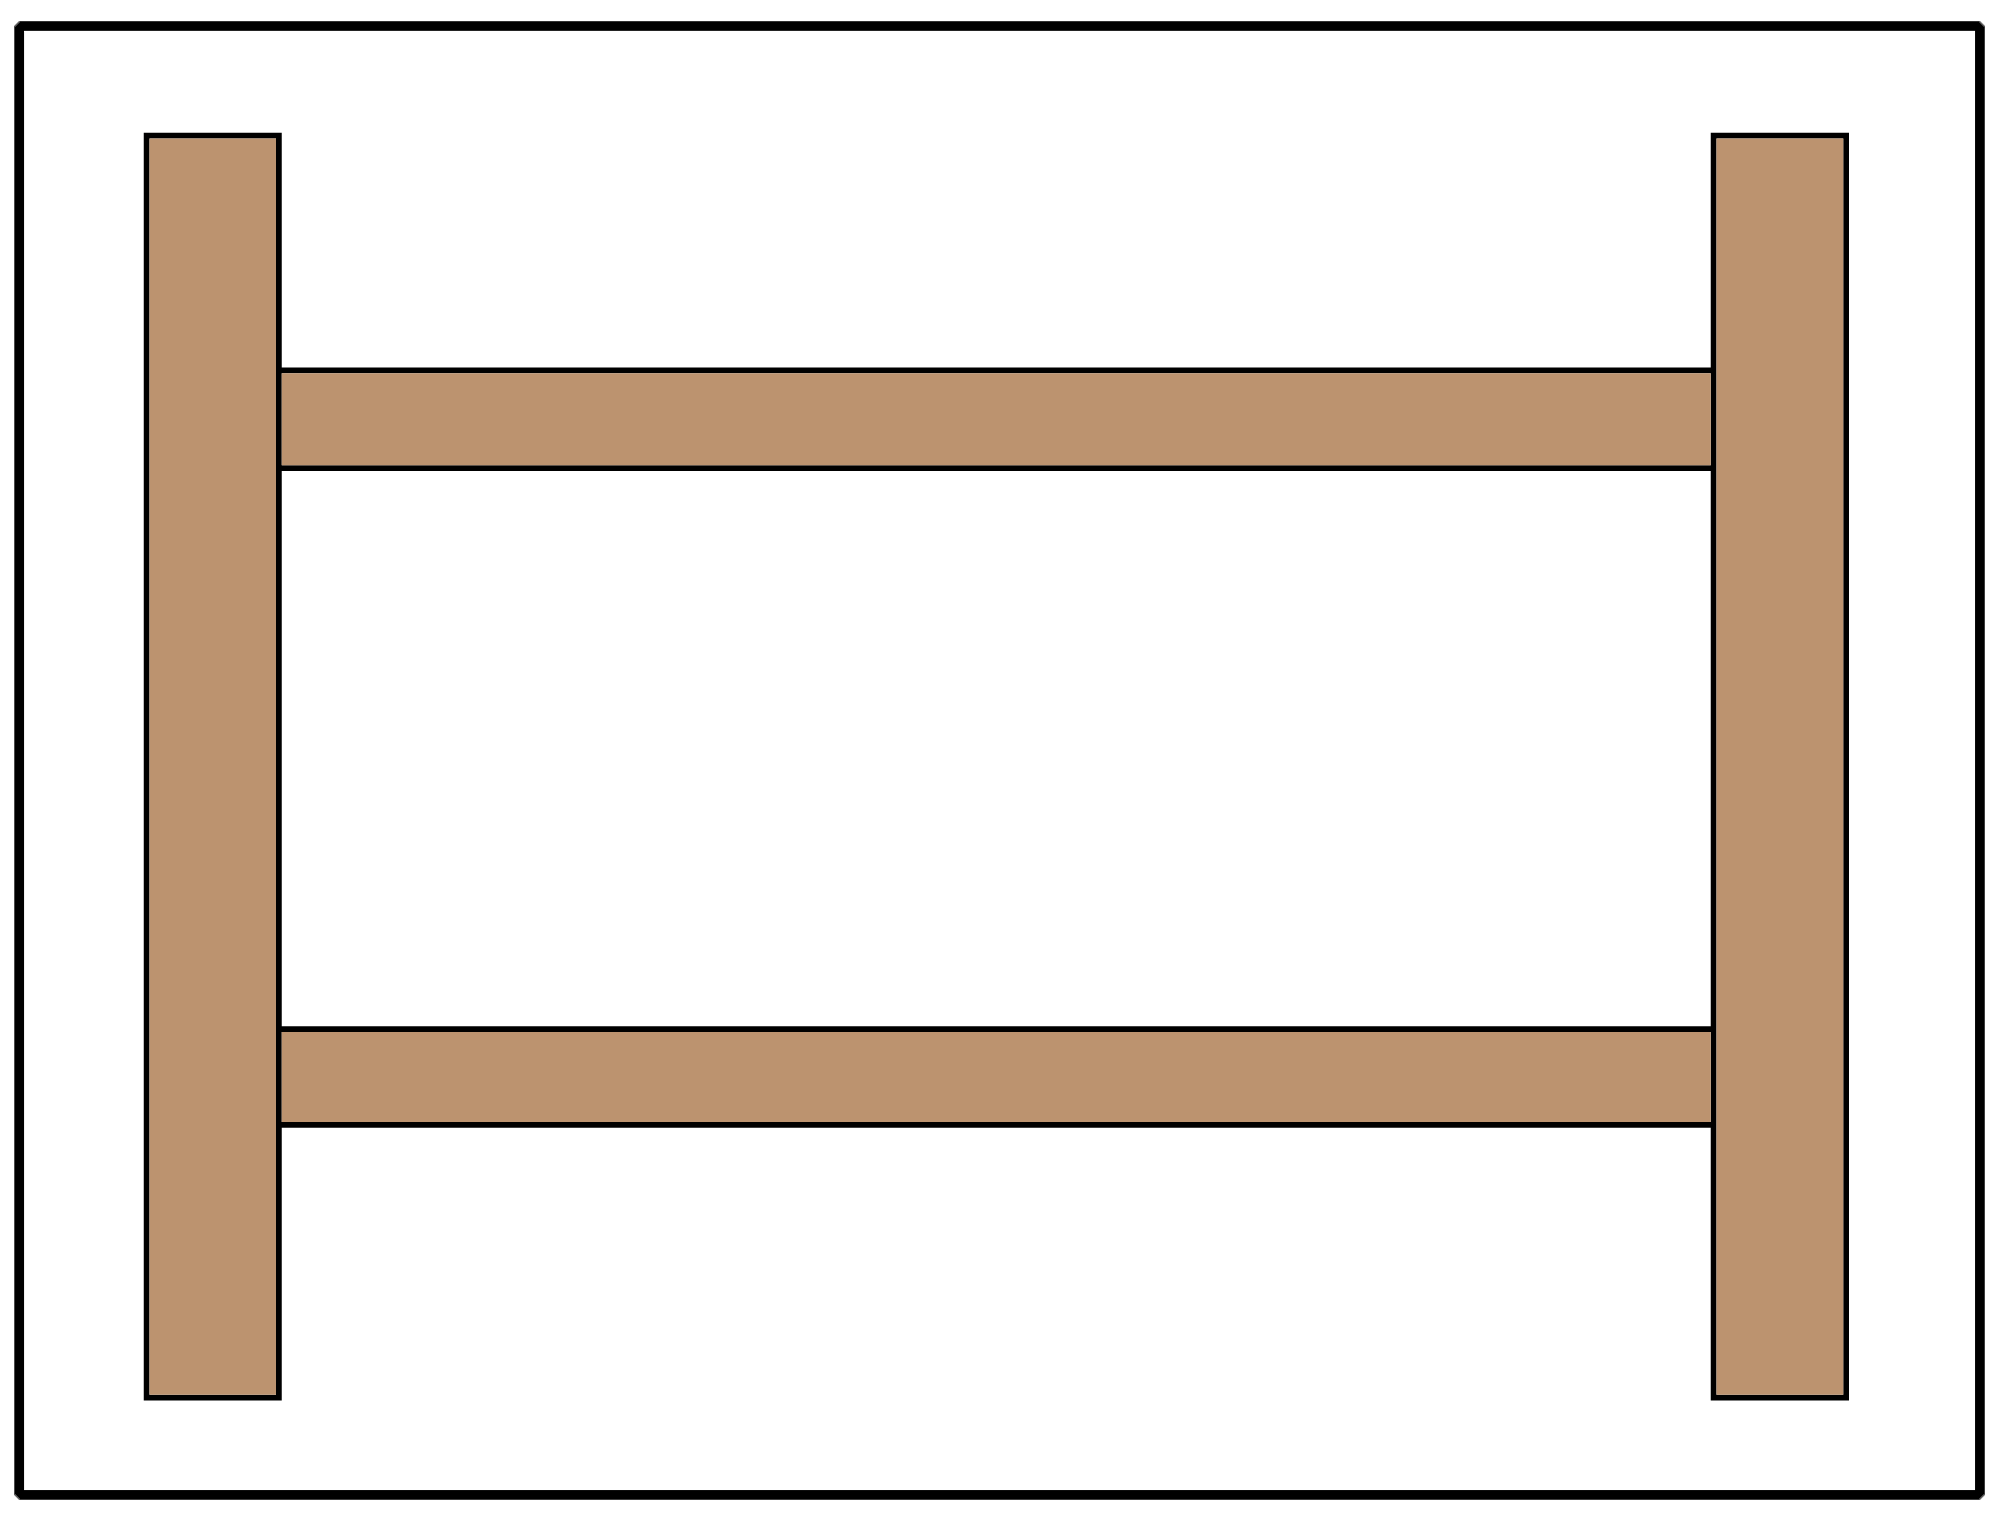 Illustration of a split rail or estate fence using 2 rails